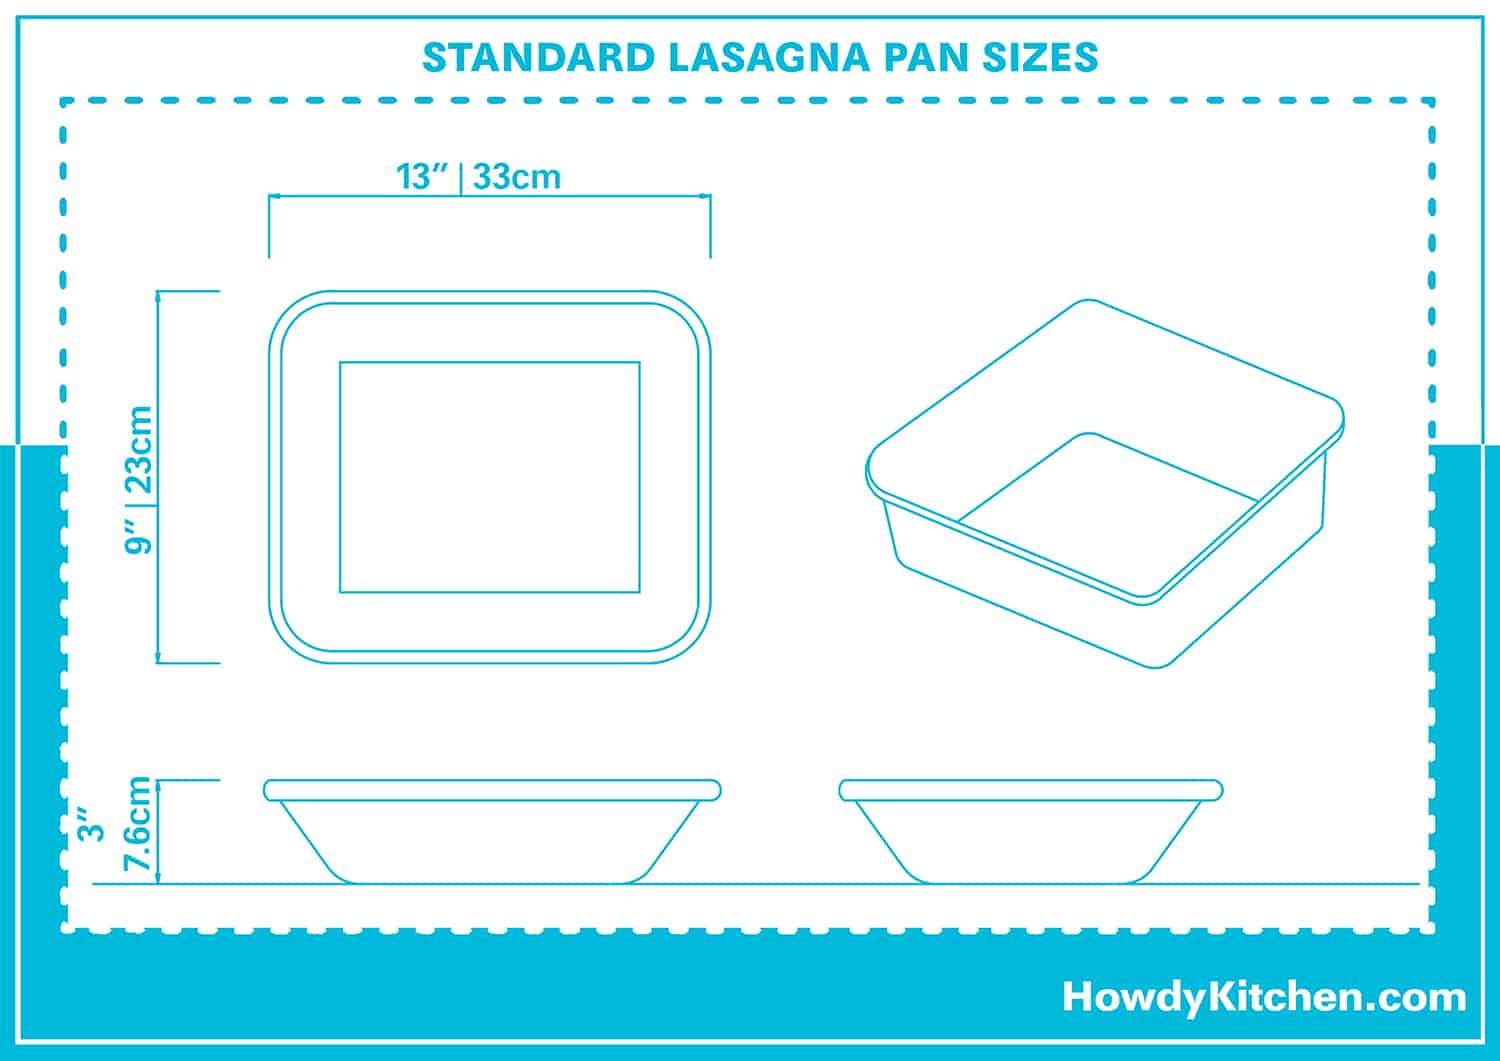 Standard Lasagna Pan Sizes